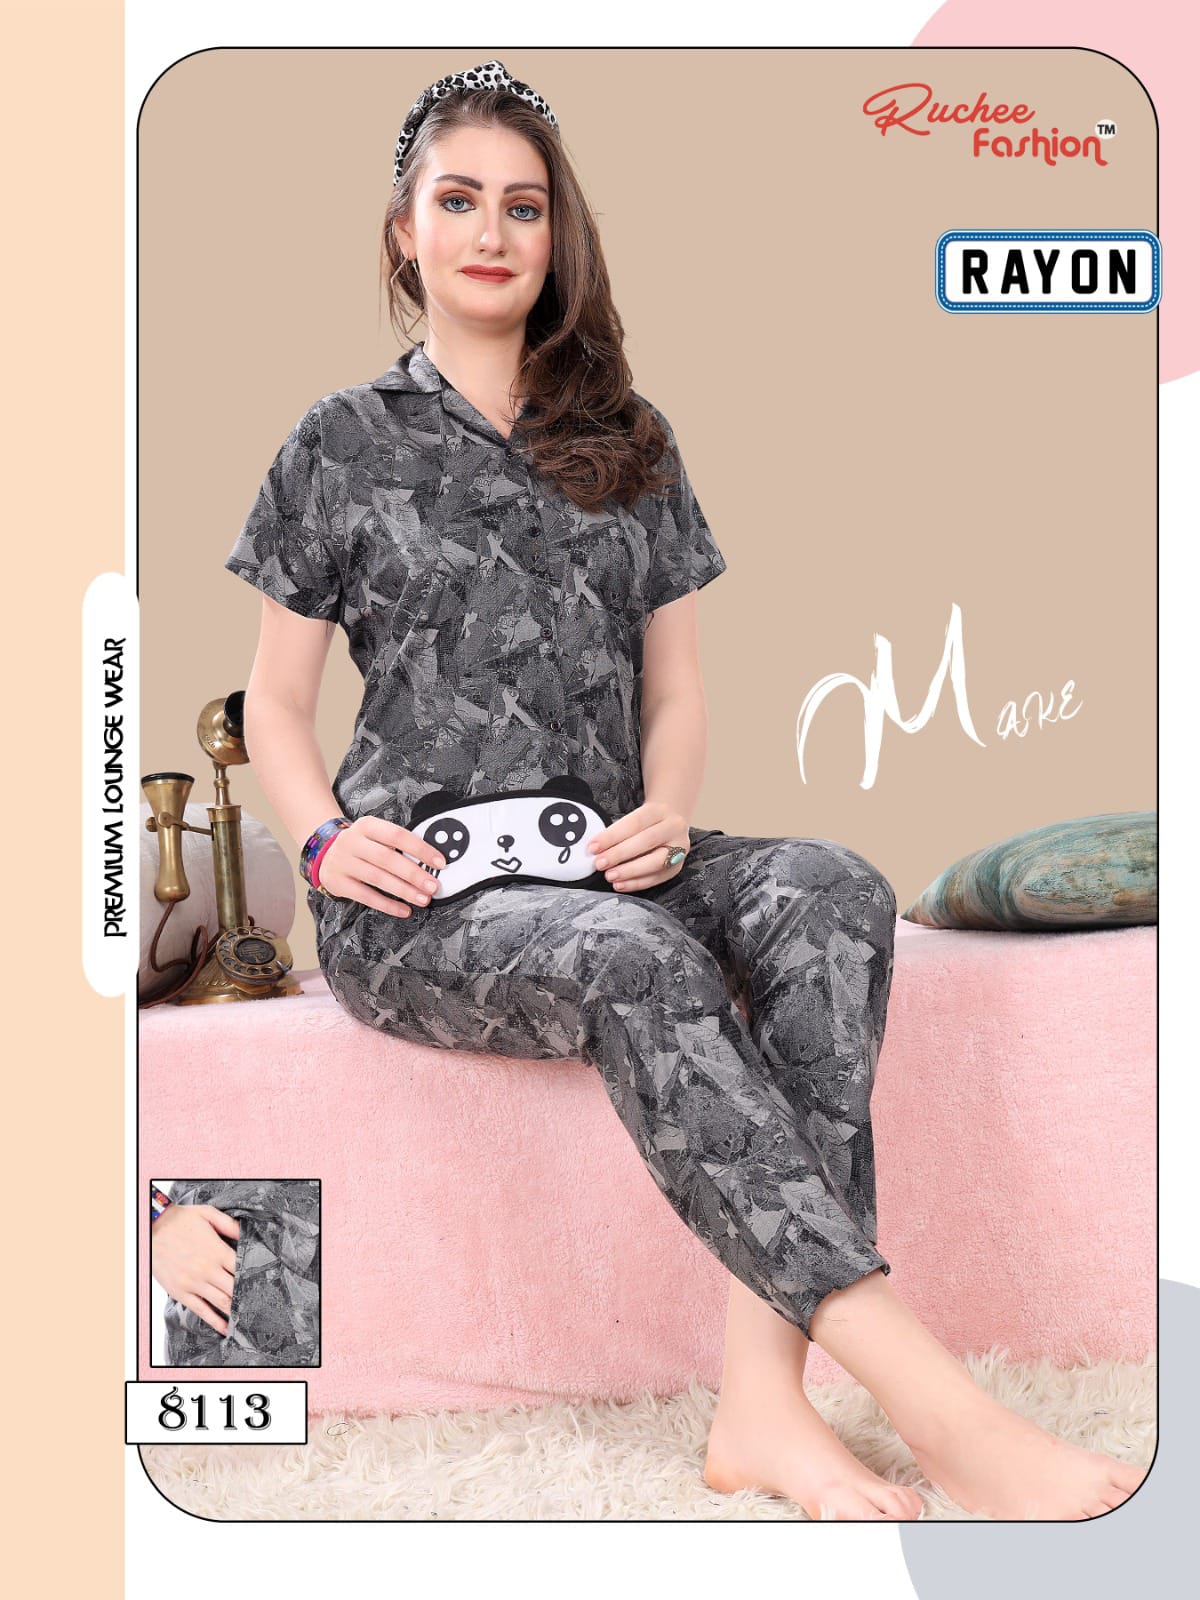 Rayon 0711 Ruchee Fashion Collar Night Suits